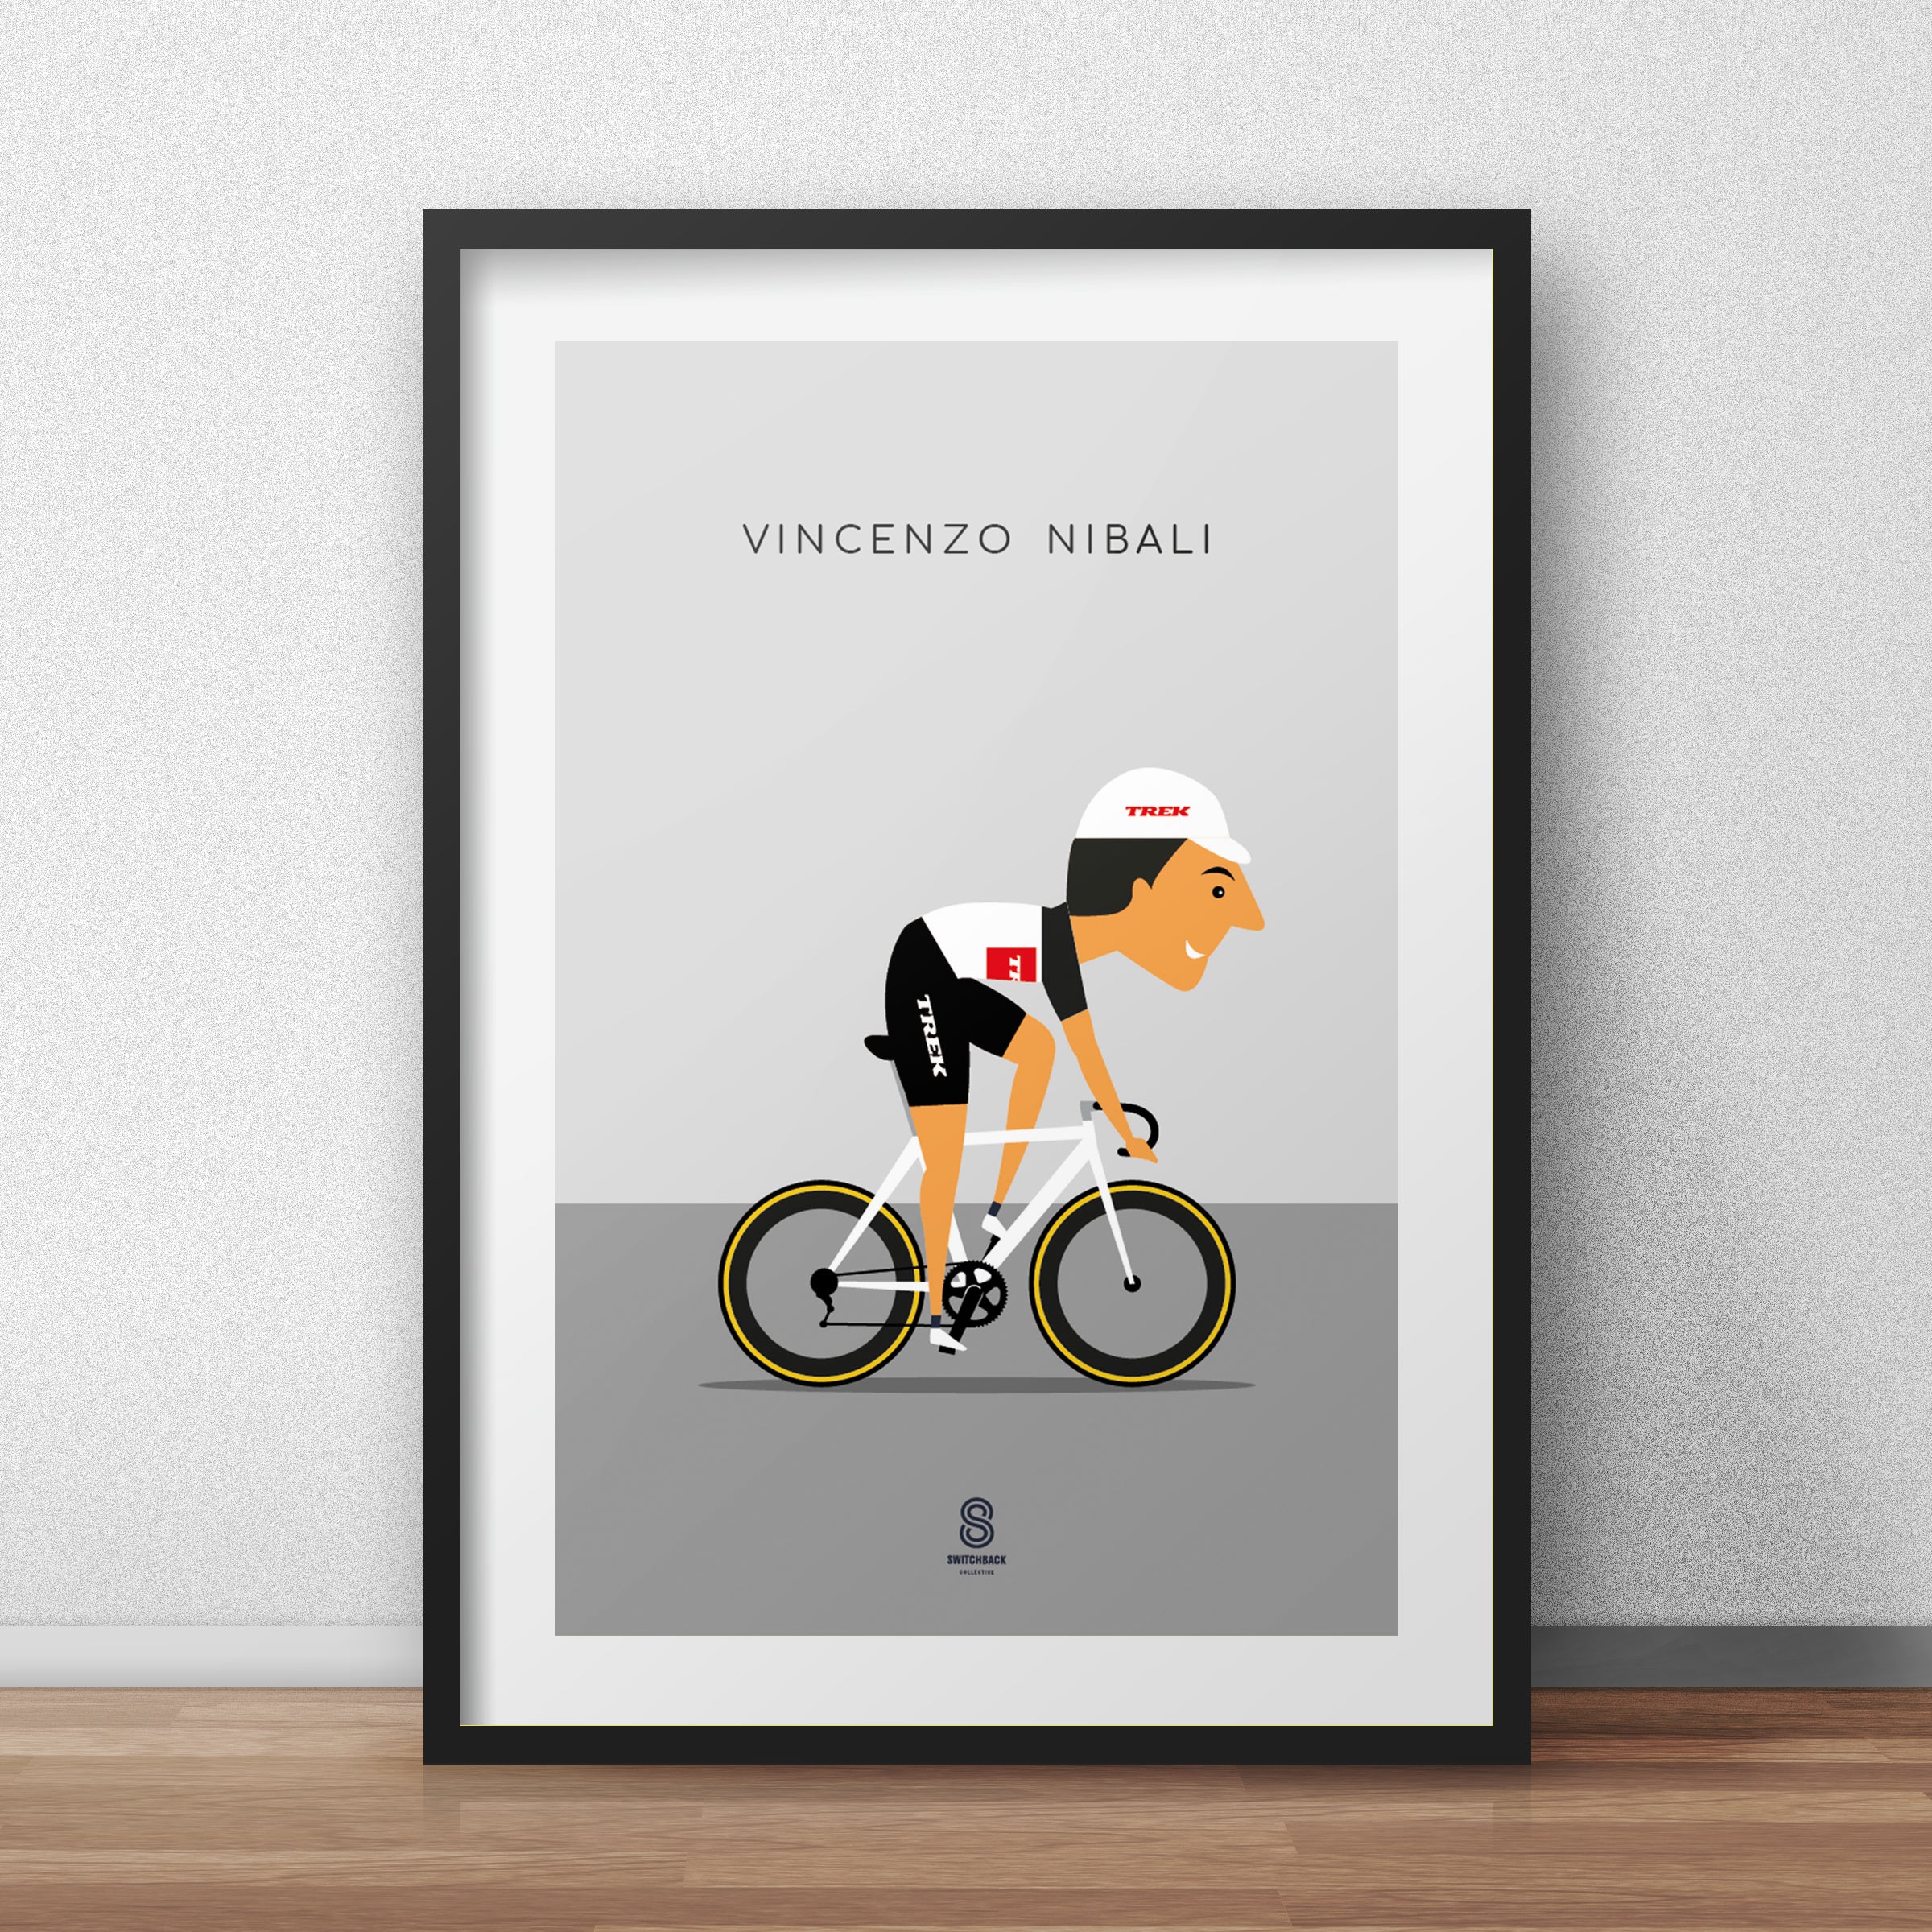 Vincenzo Nibali - Team Trek Print